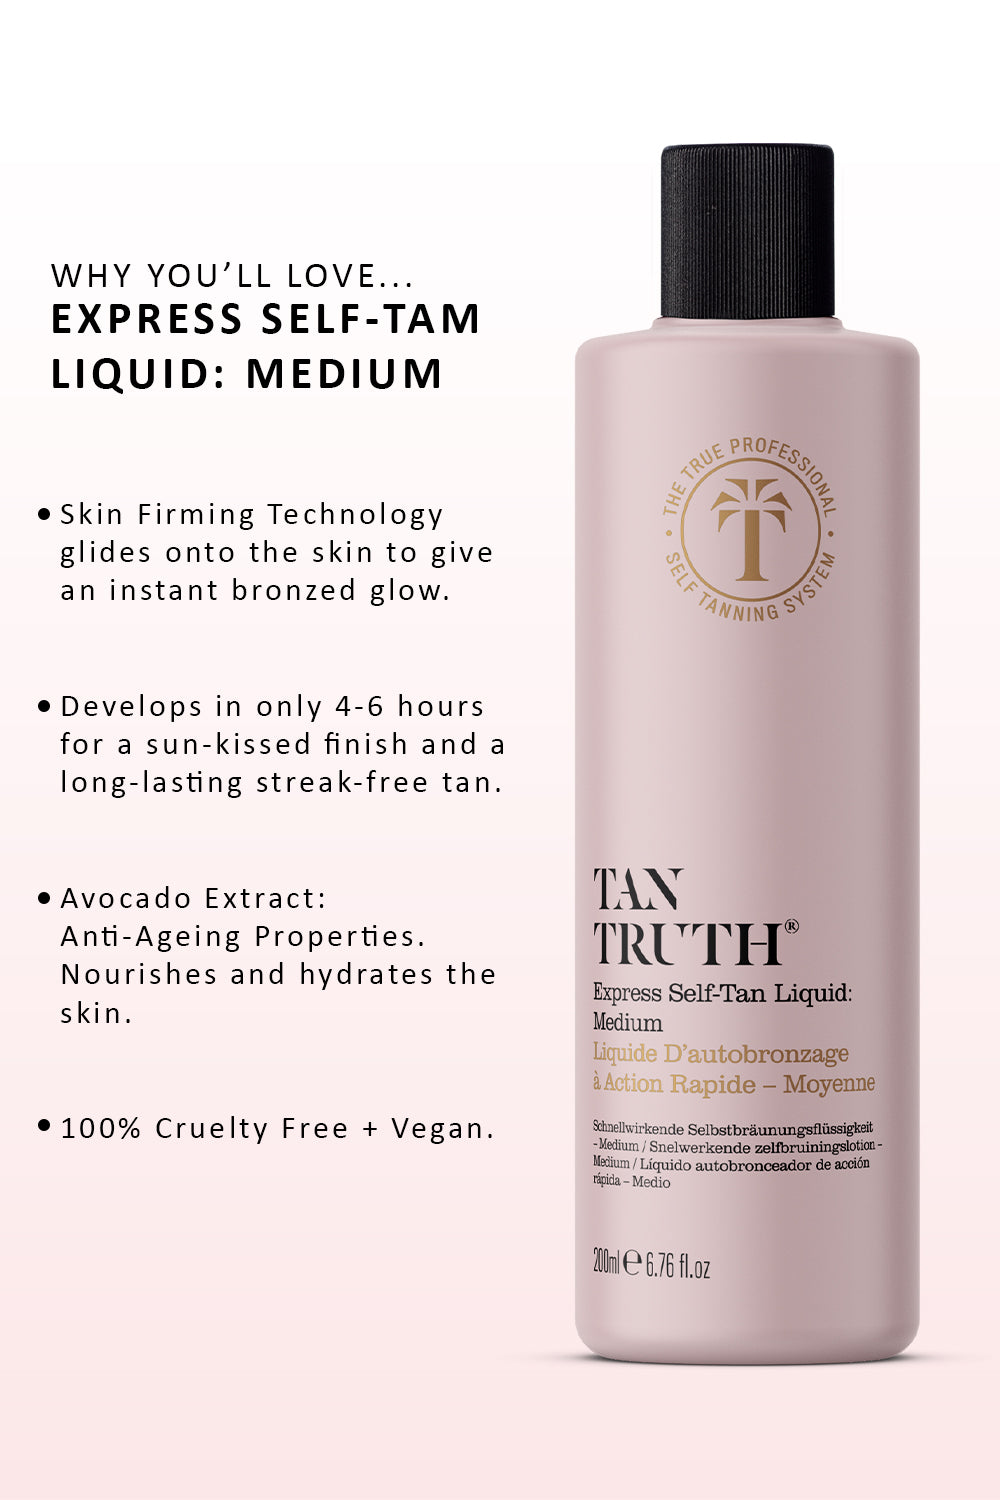 Express Self-Tan Liquid: Medium